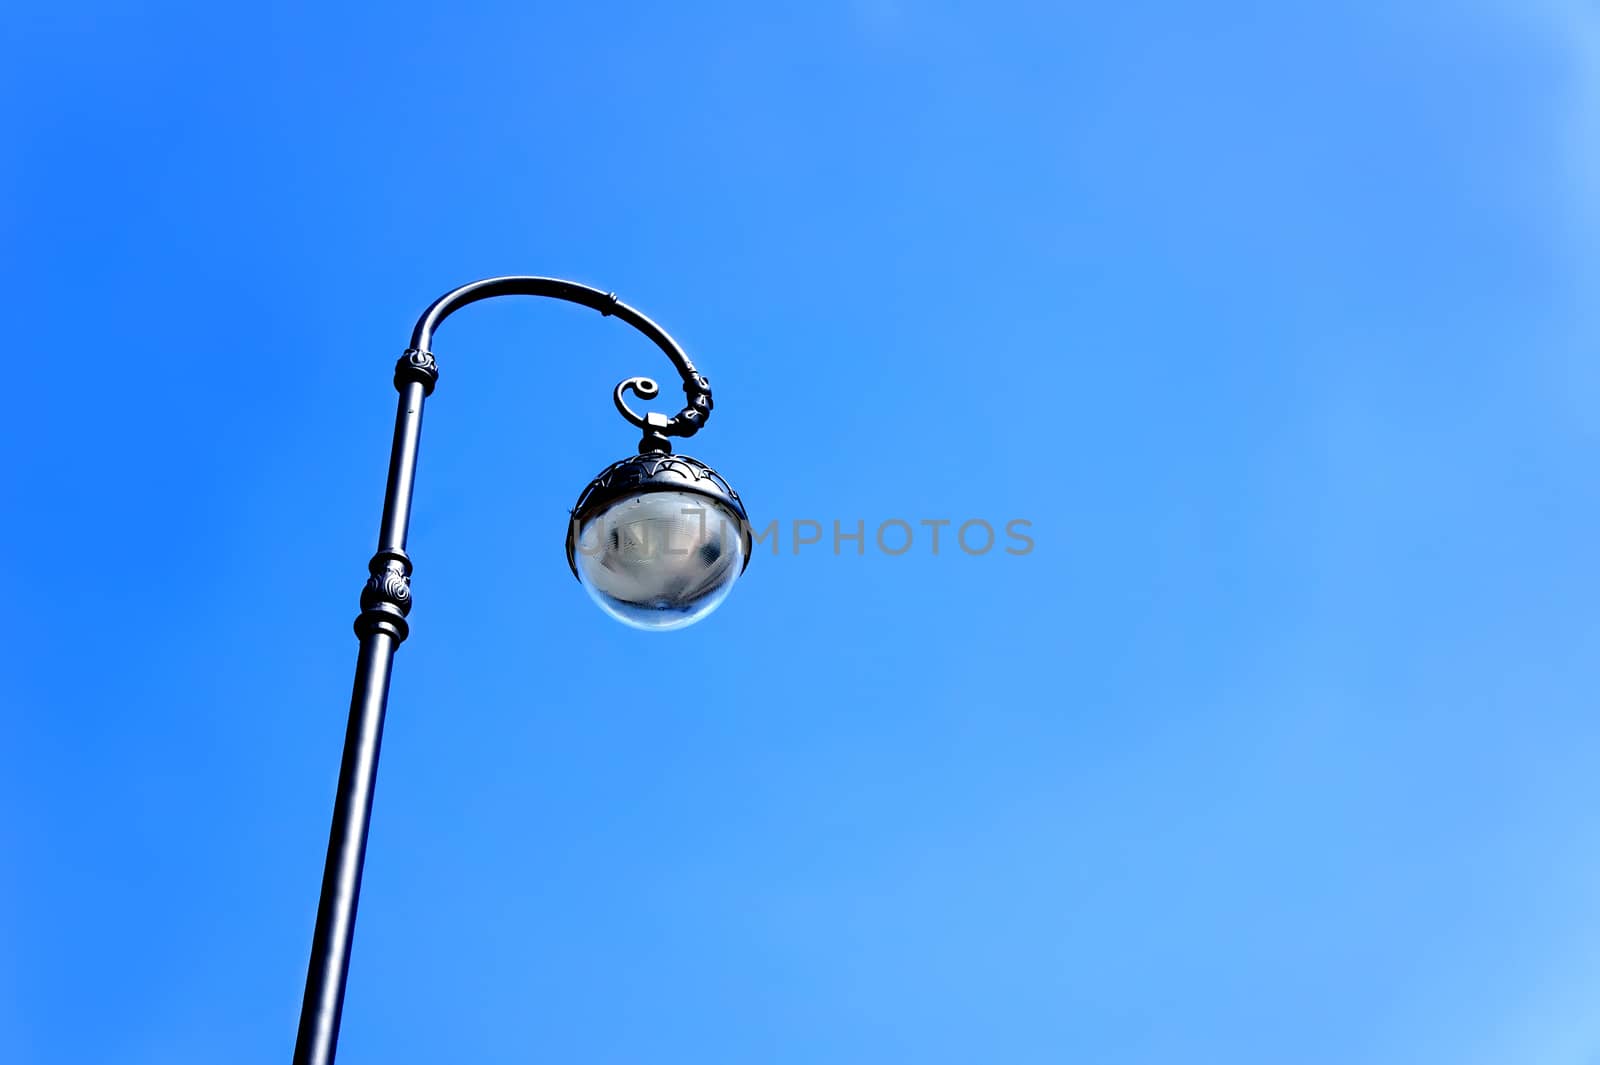 Street lamp on background of blue sky